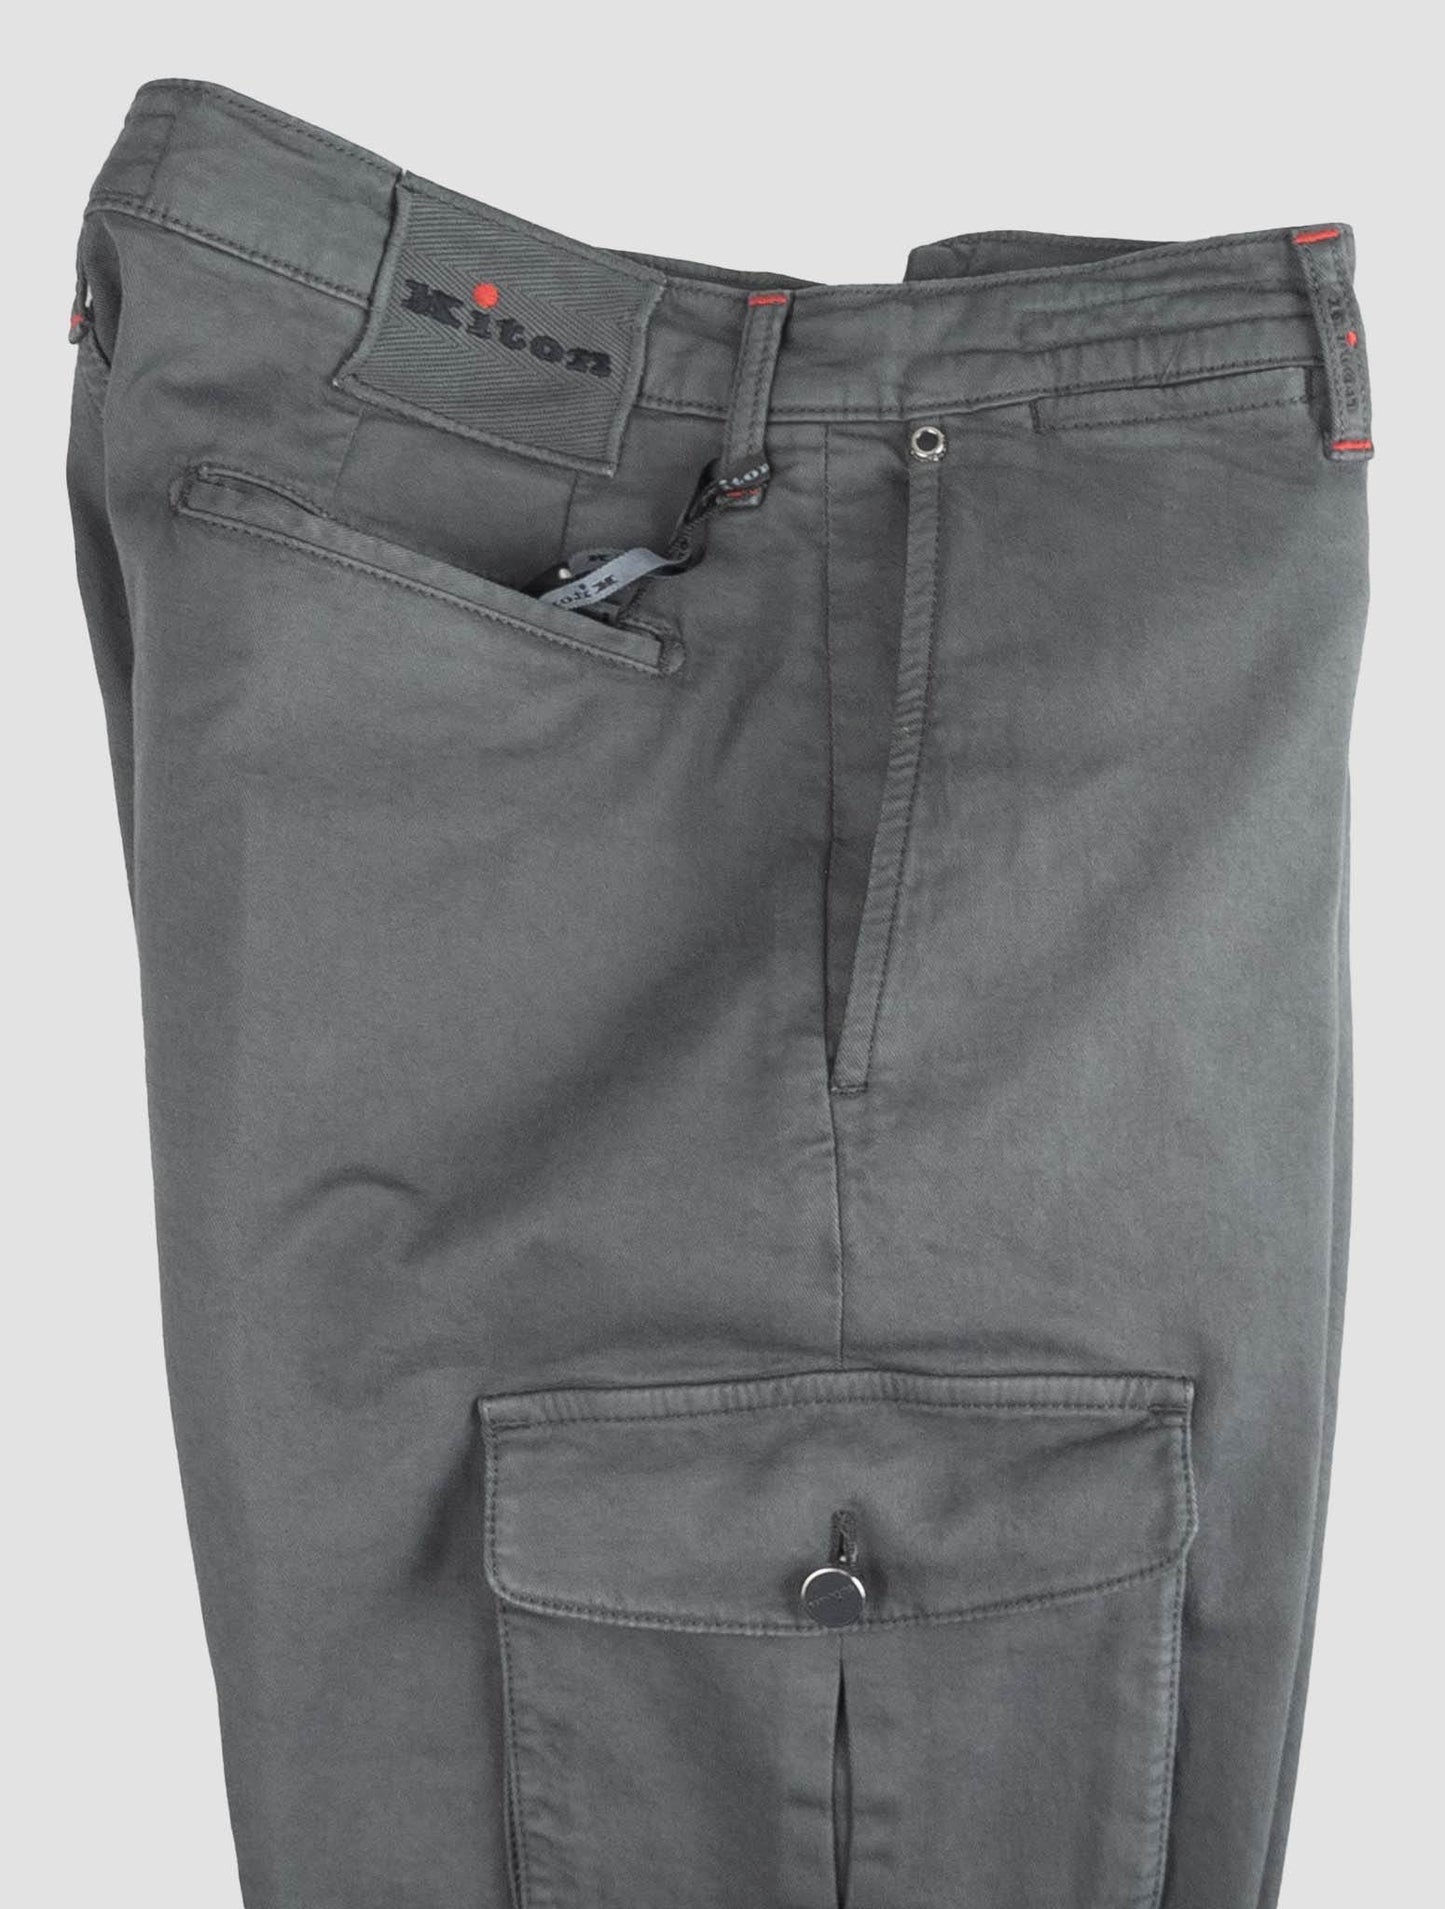 Pantalones cargo Ea de algodón gris de Kiton